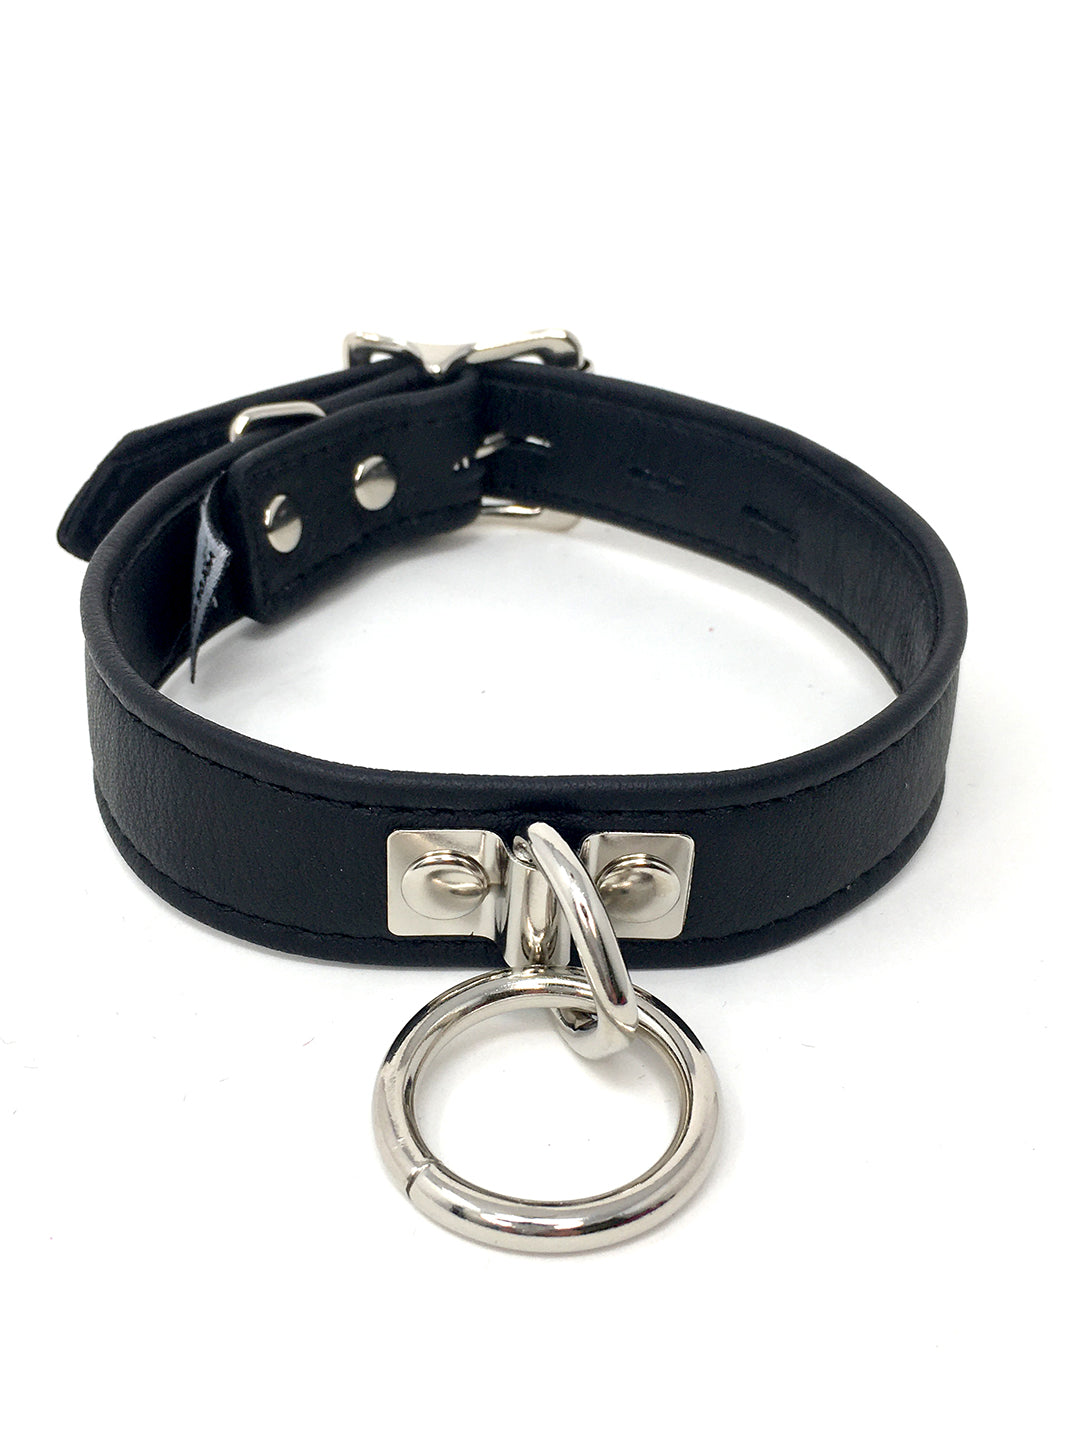 Leather Locking Buckle Collar